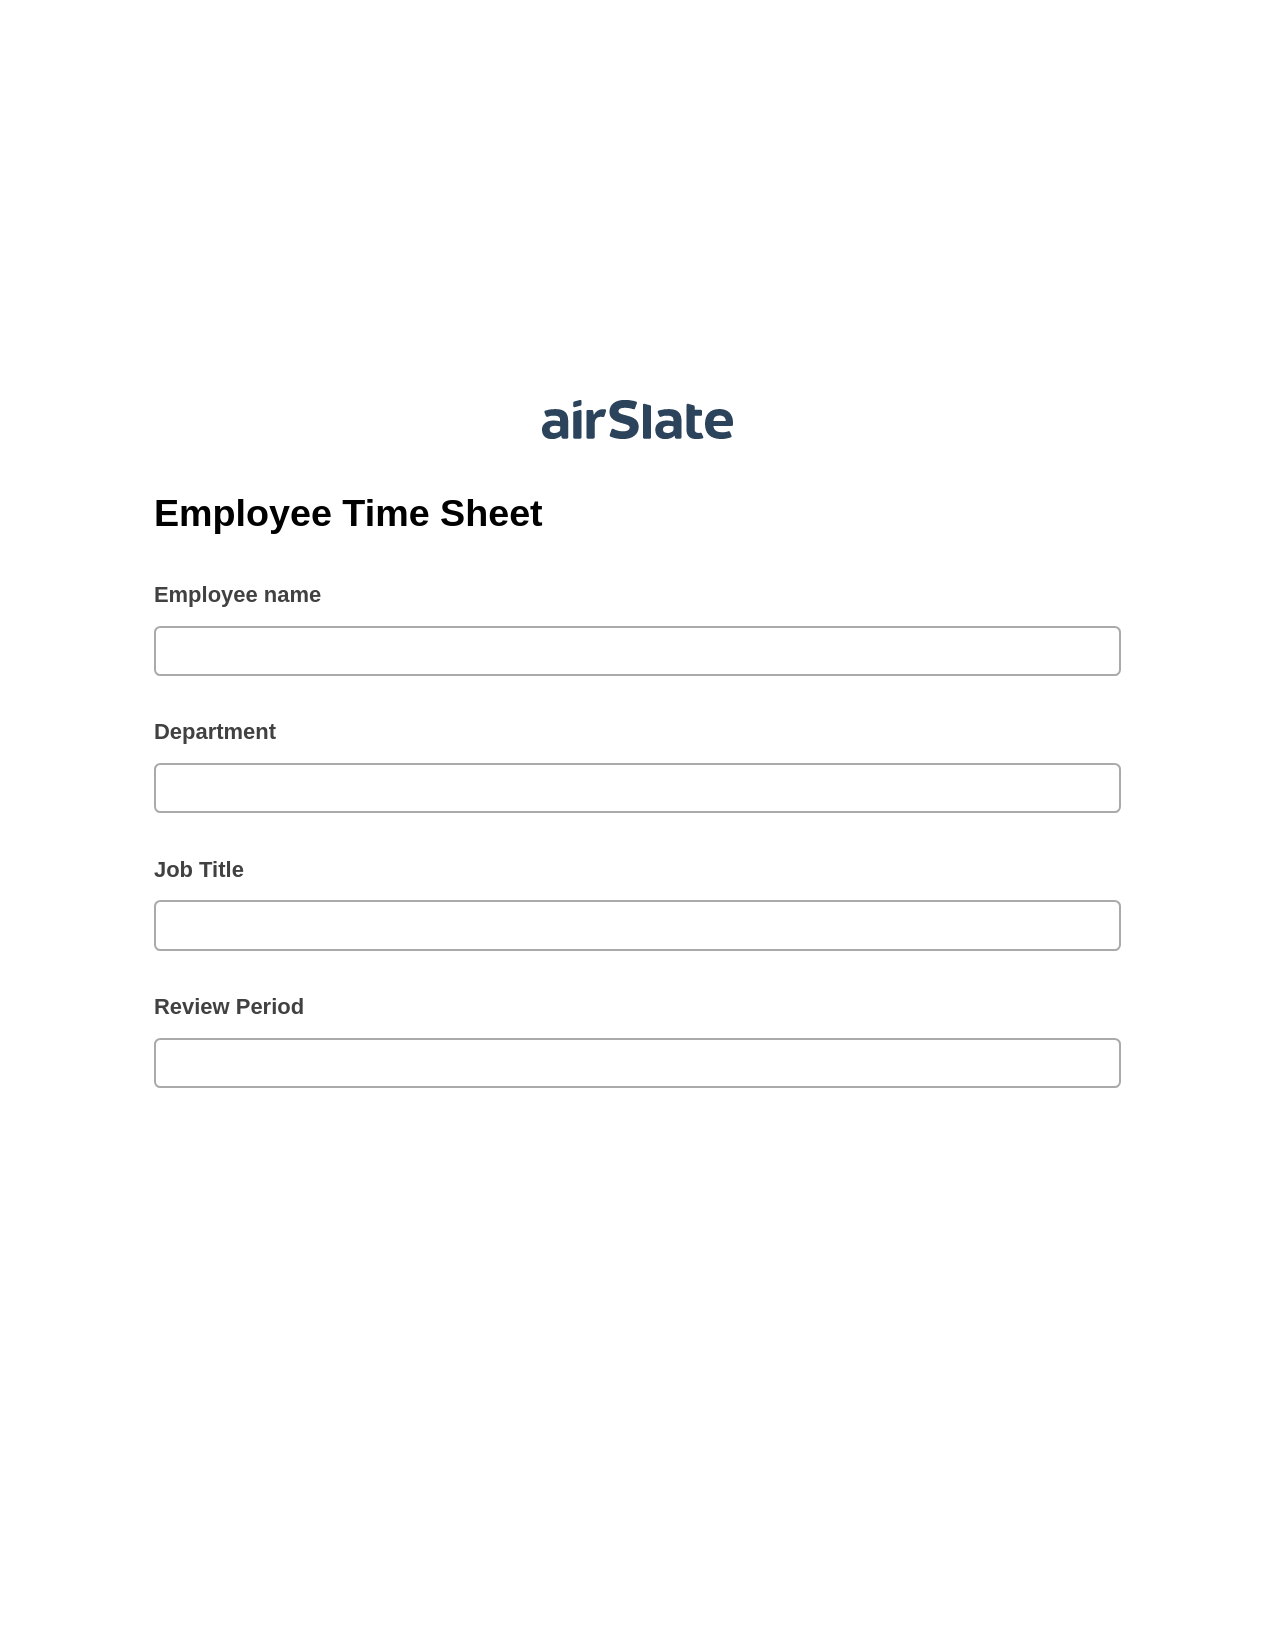 Multirole Employee Time Sheet Pre-fill from CSV File Bot, Google Cloud Print Bot, Export to Smartsheet